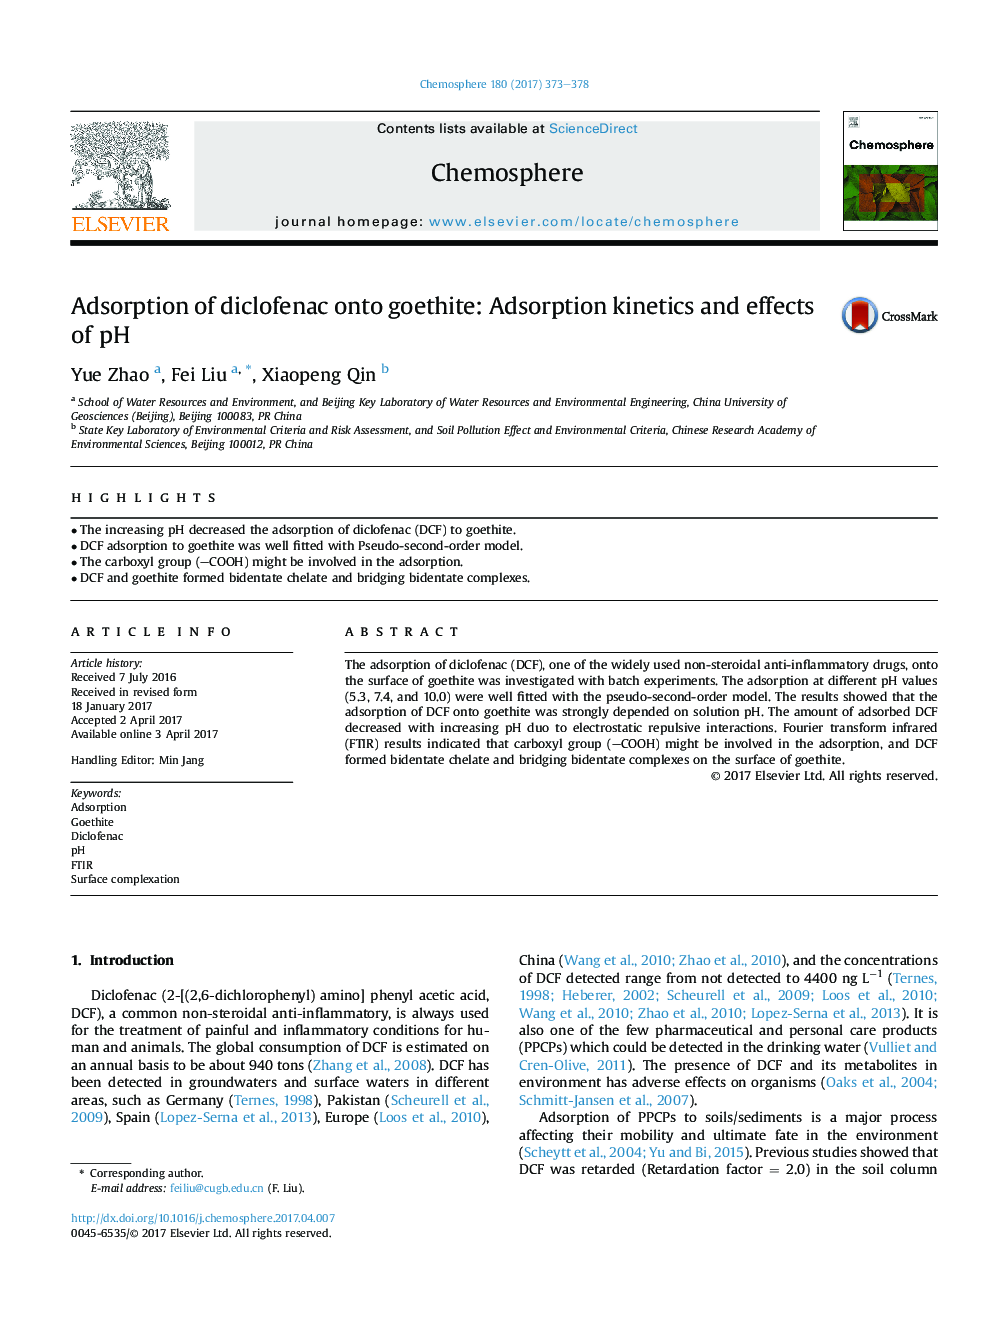 Adsorption of diclofenac onto goethite: Adsorption kinetics and effects of pH